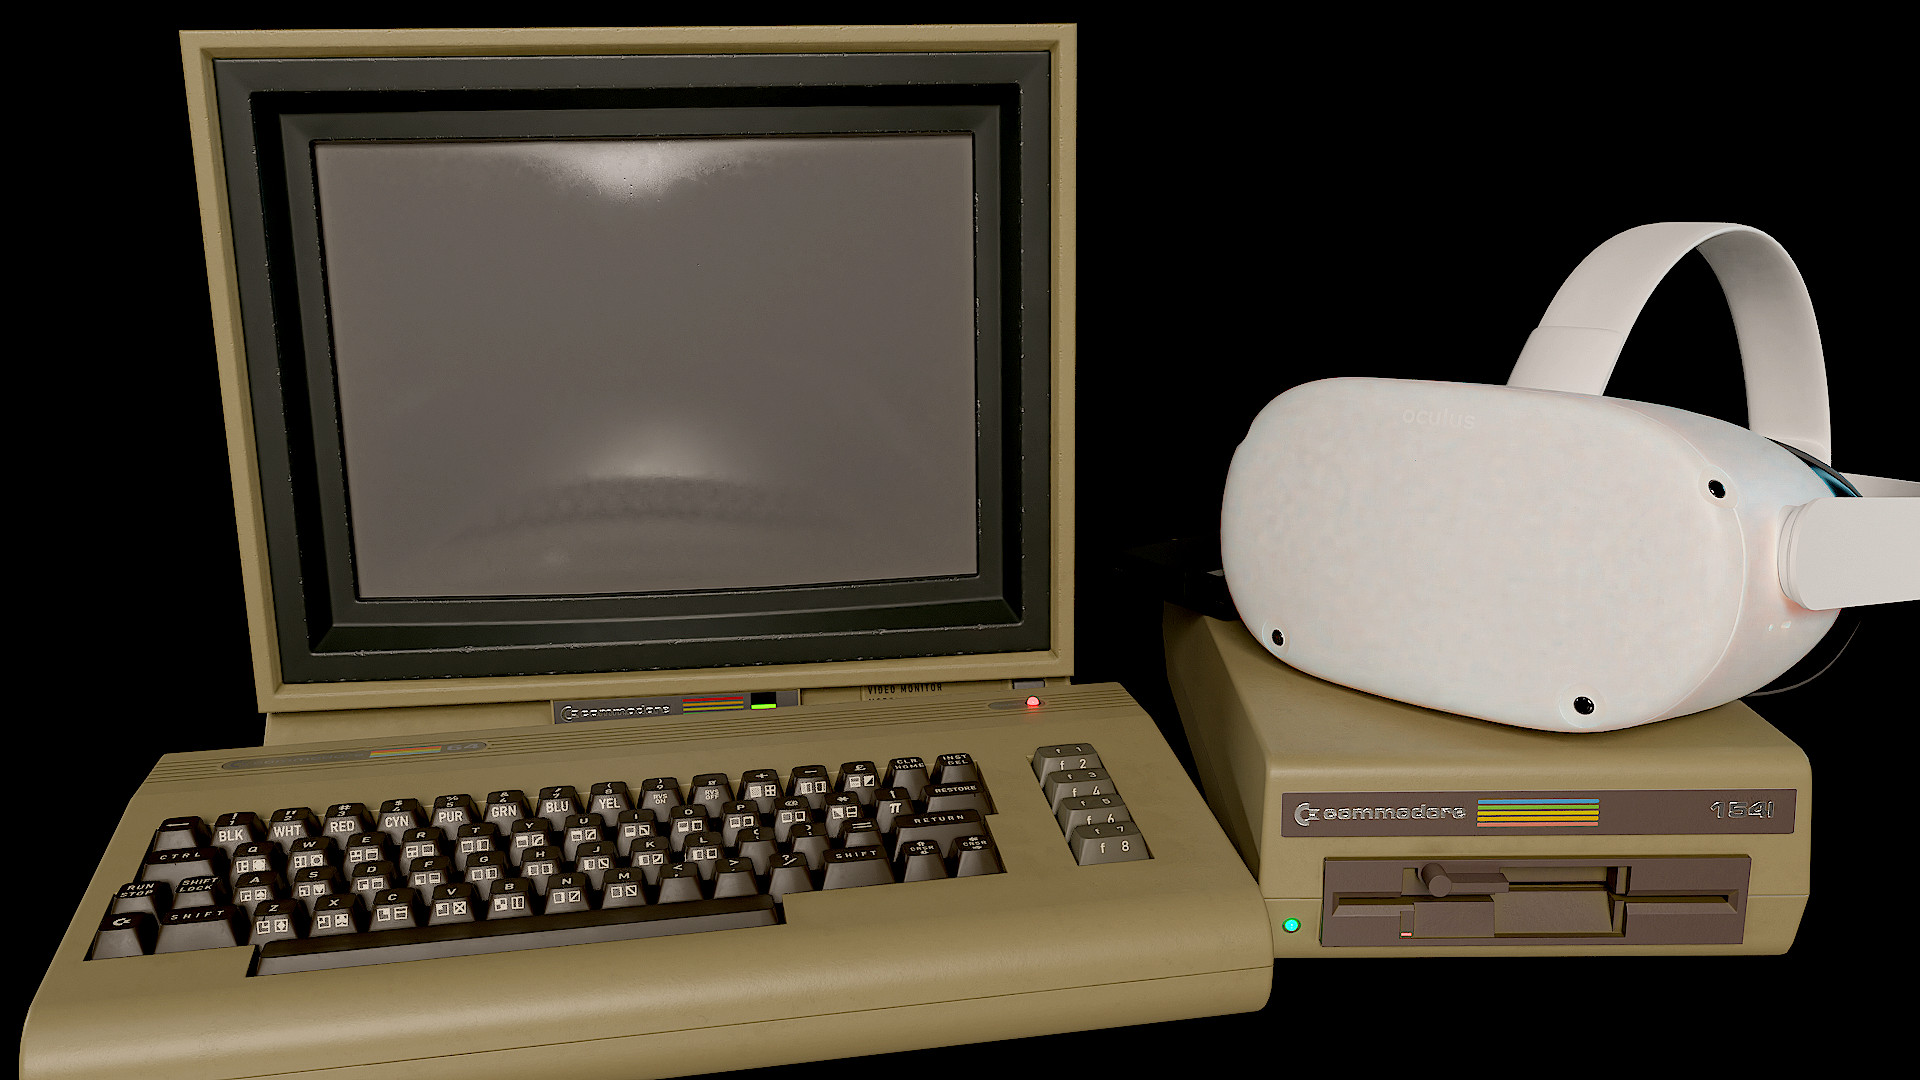 Verslaafd dictator chaos Commodore 64 Emulator Brings Retro Gaming To Oculus Quest - VRScout